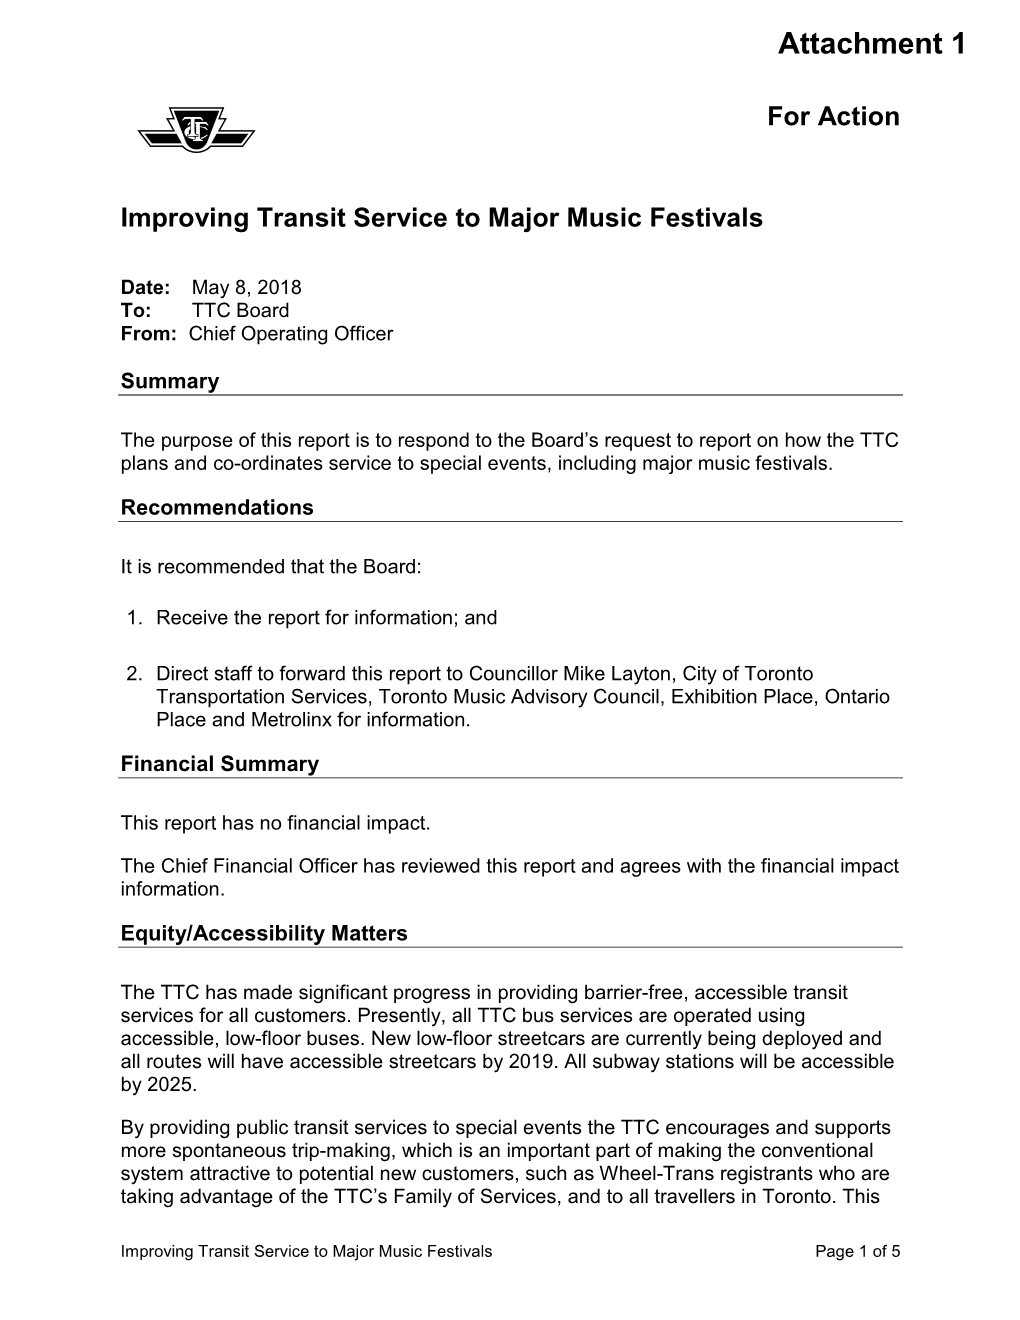 Improving Transit Service Options to Major Music Festivals